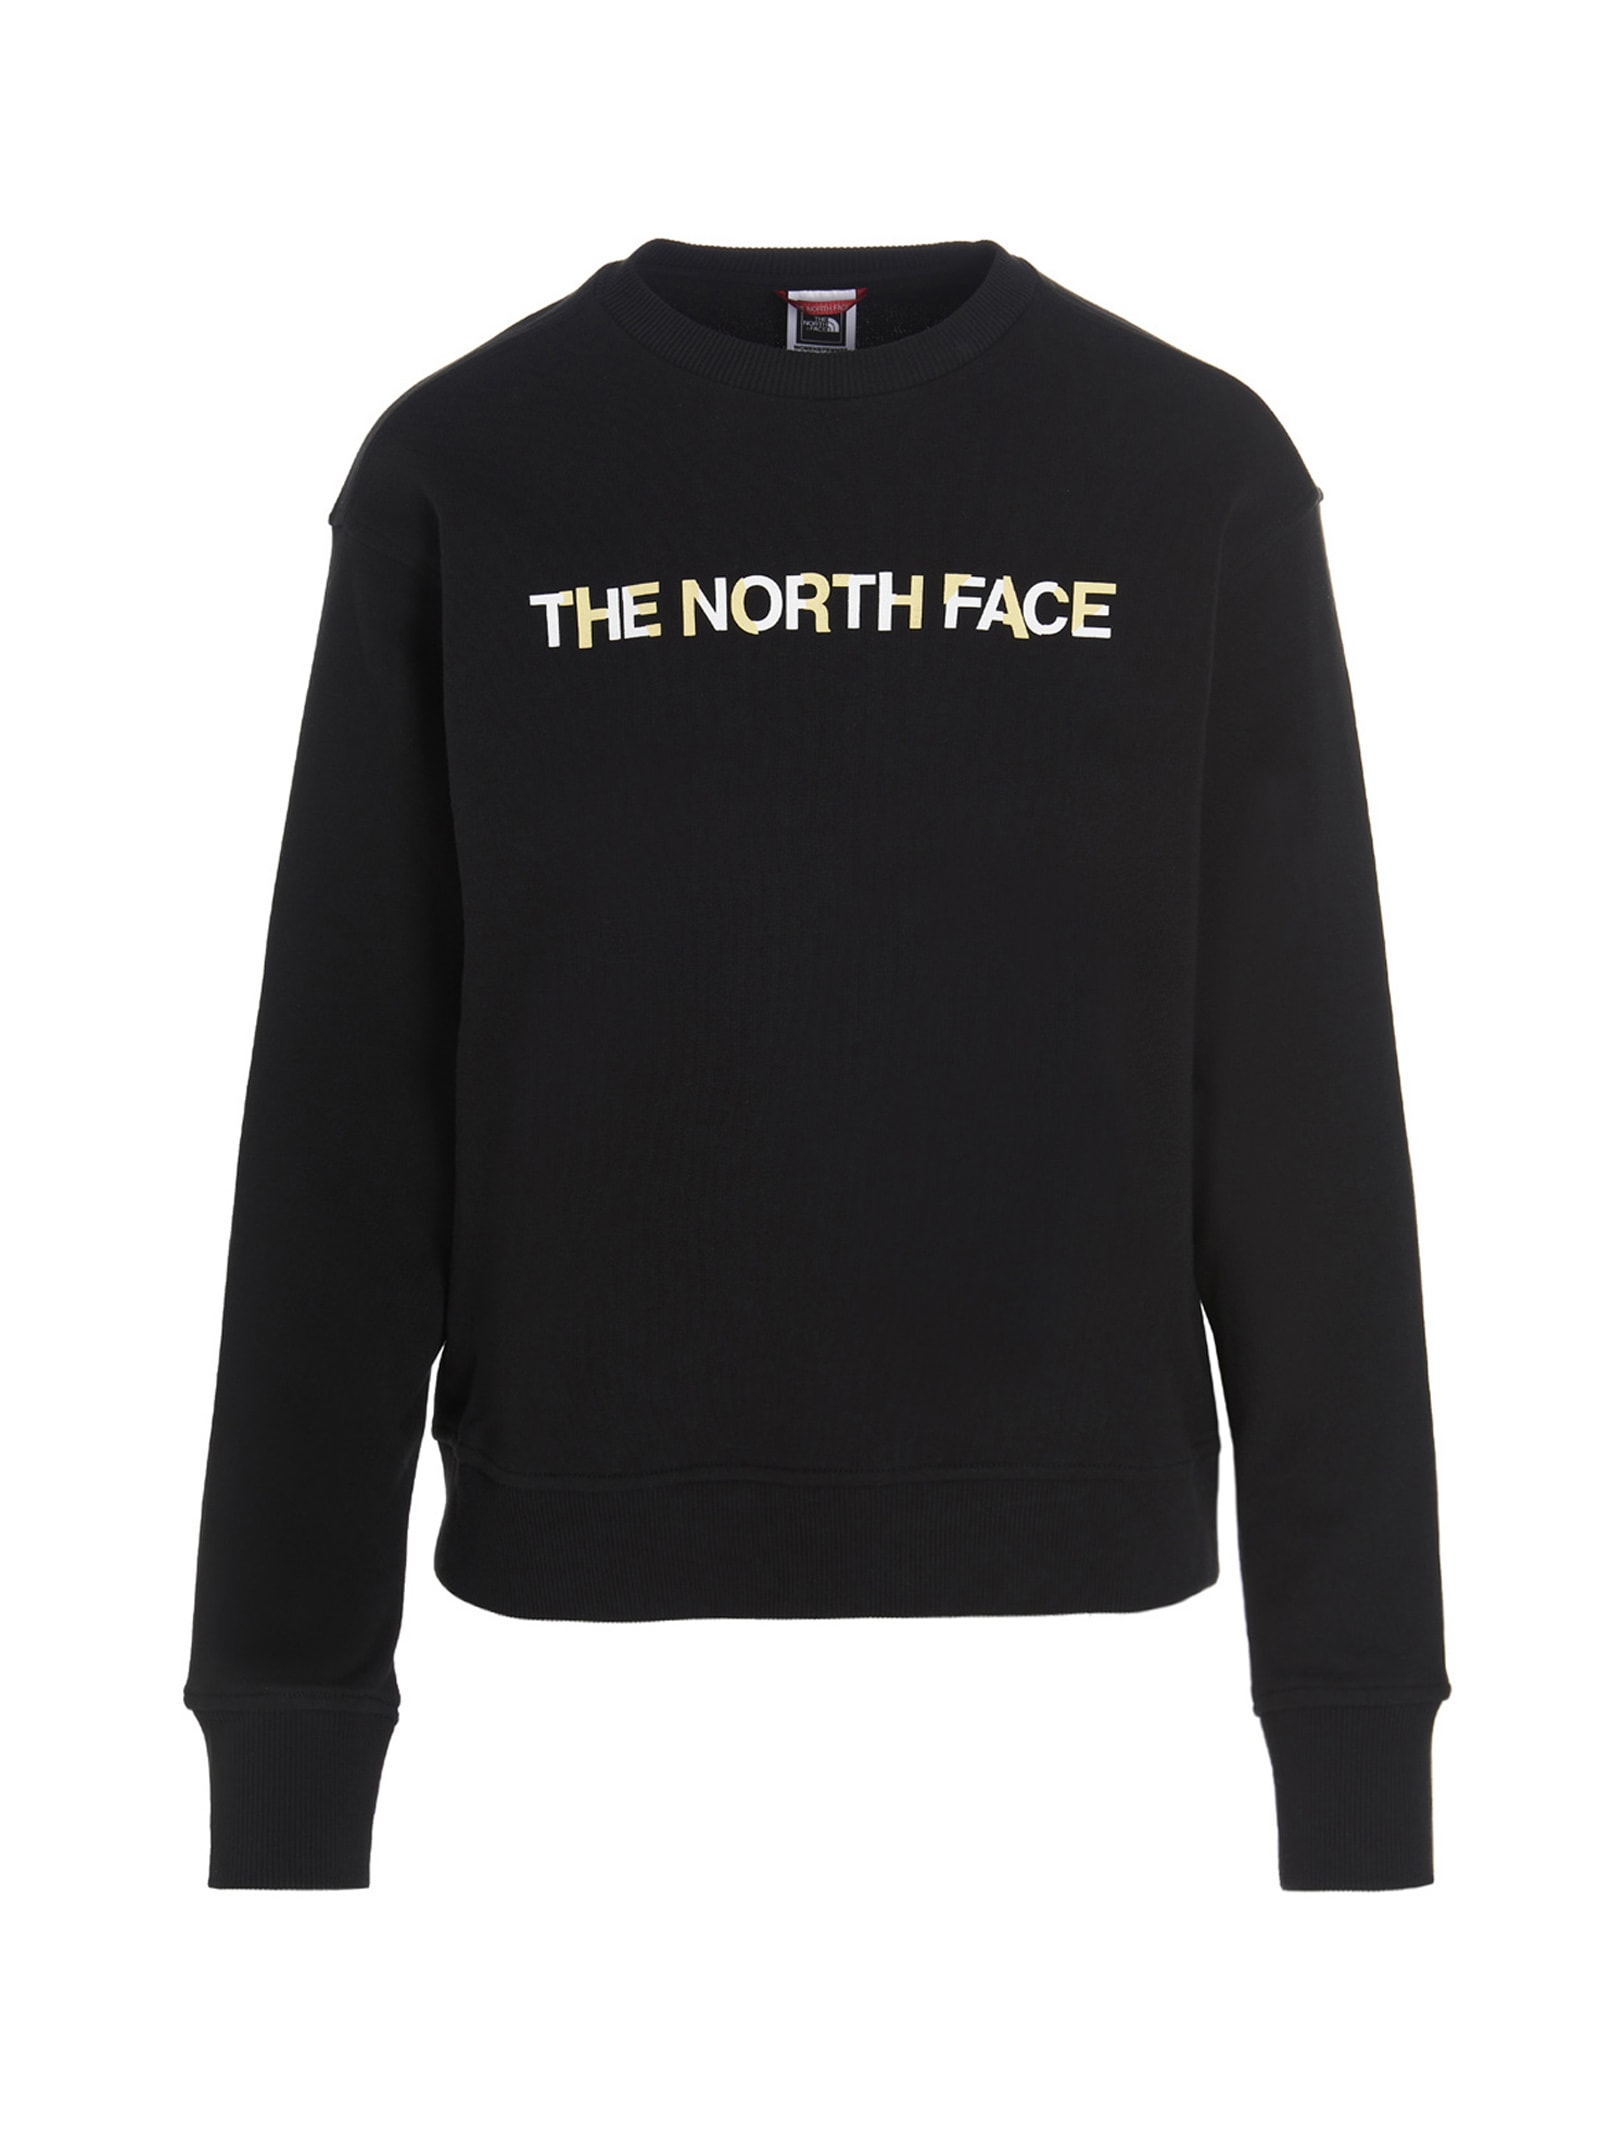 The North Face crew Graphic Sweatshirt